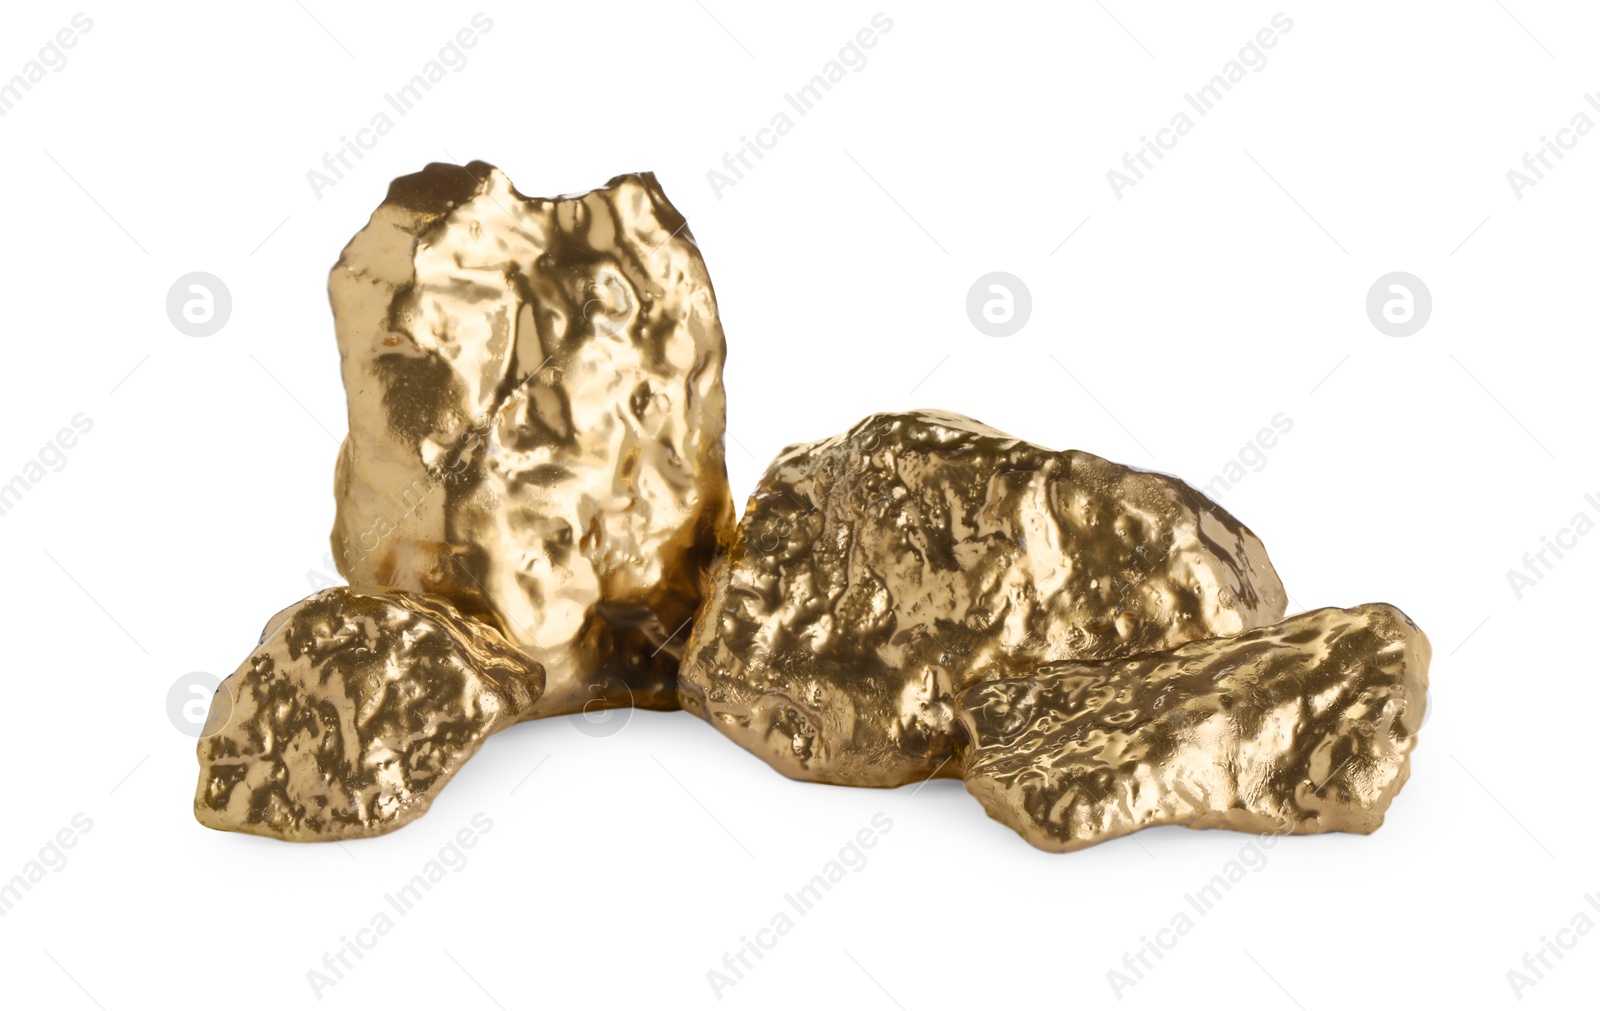 Photo of Pile of shiny gold nuggets on white background